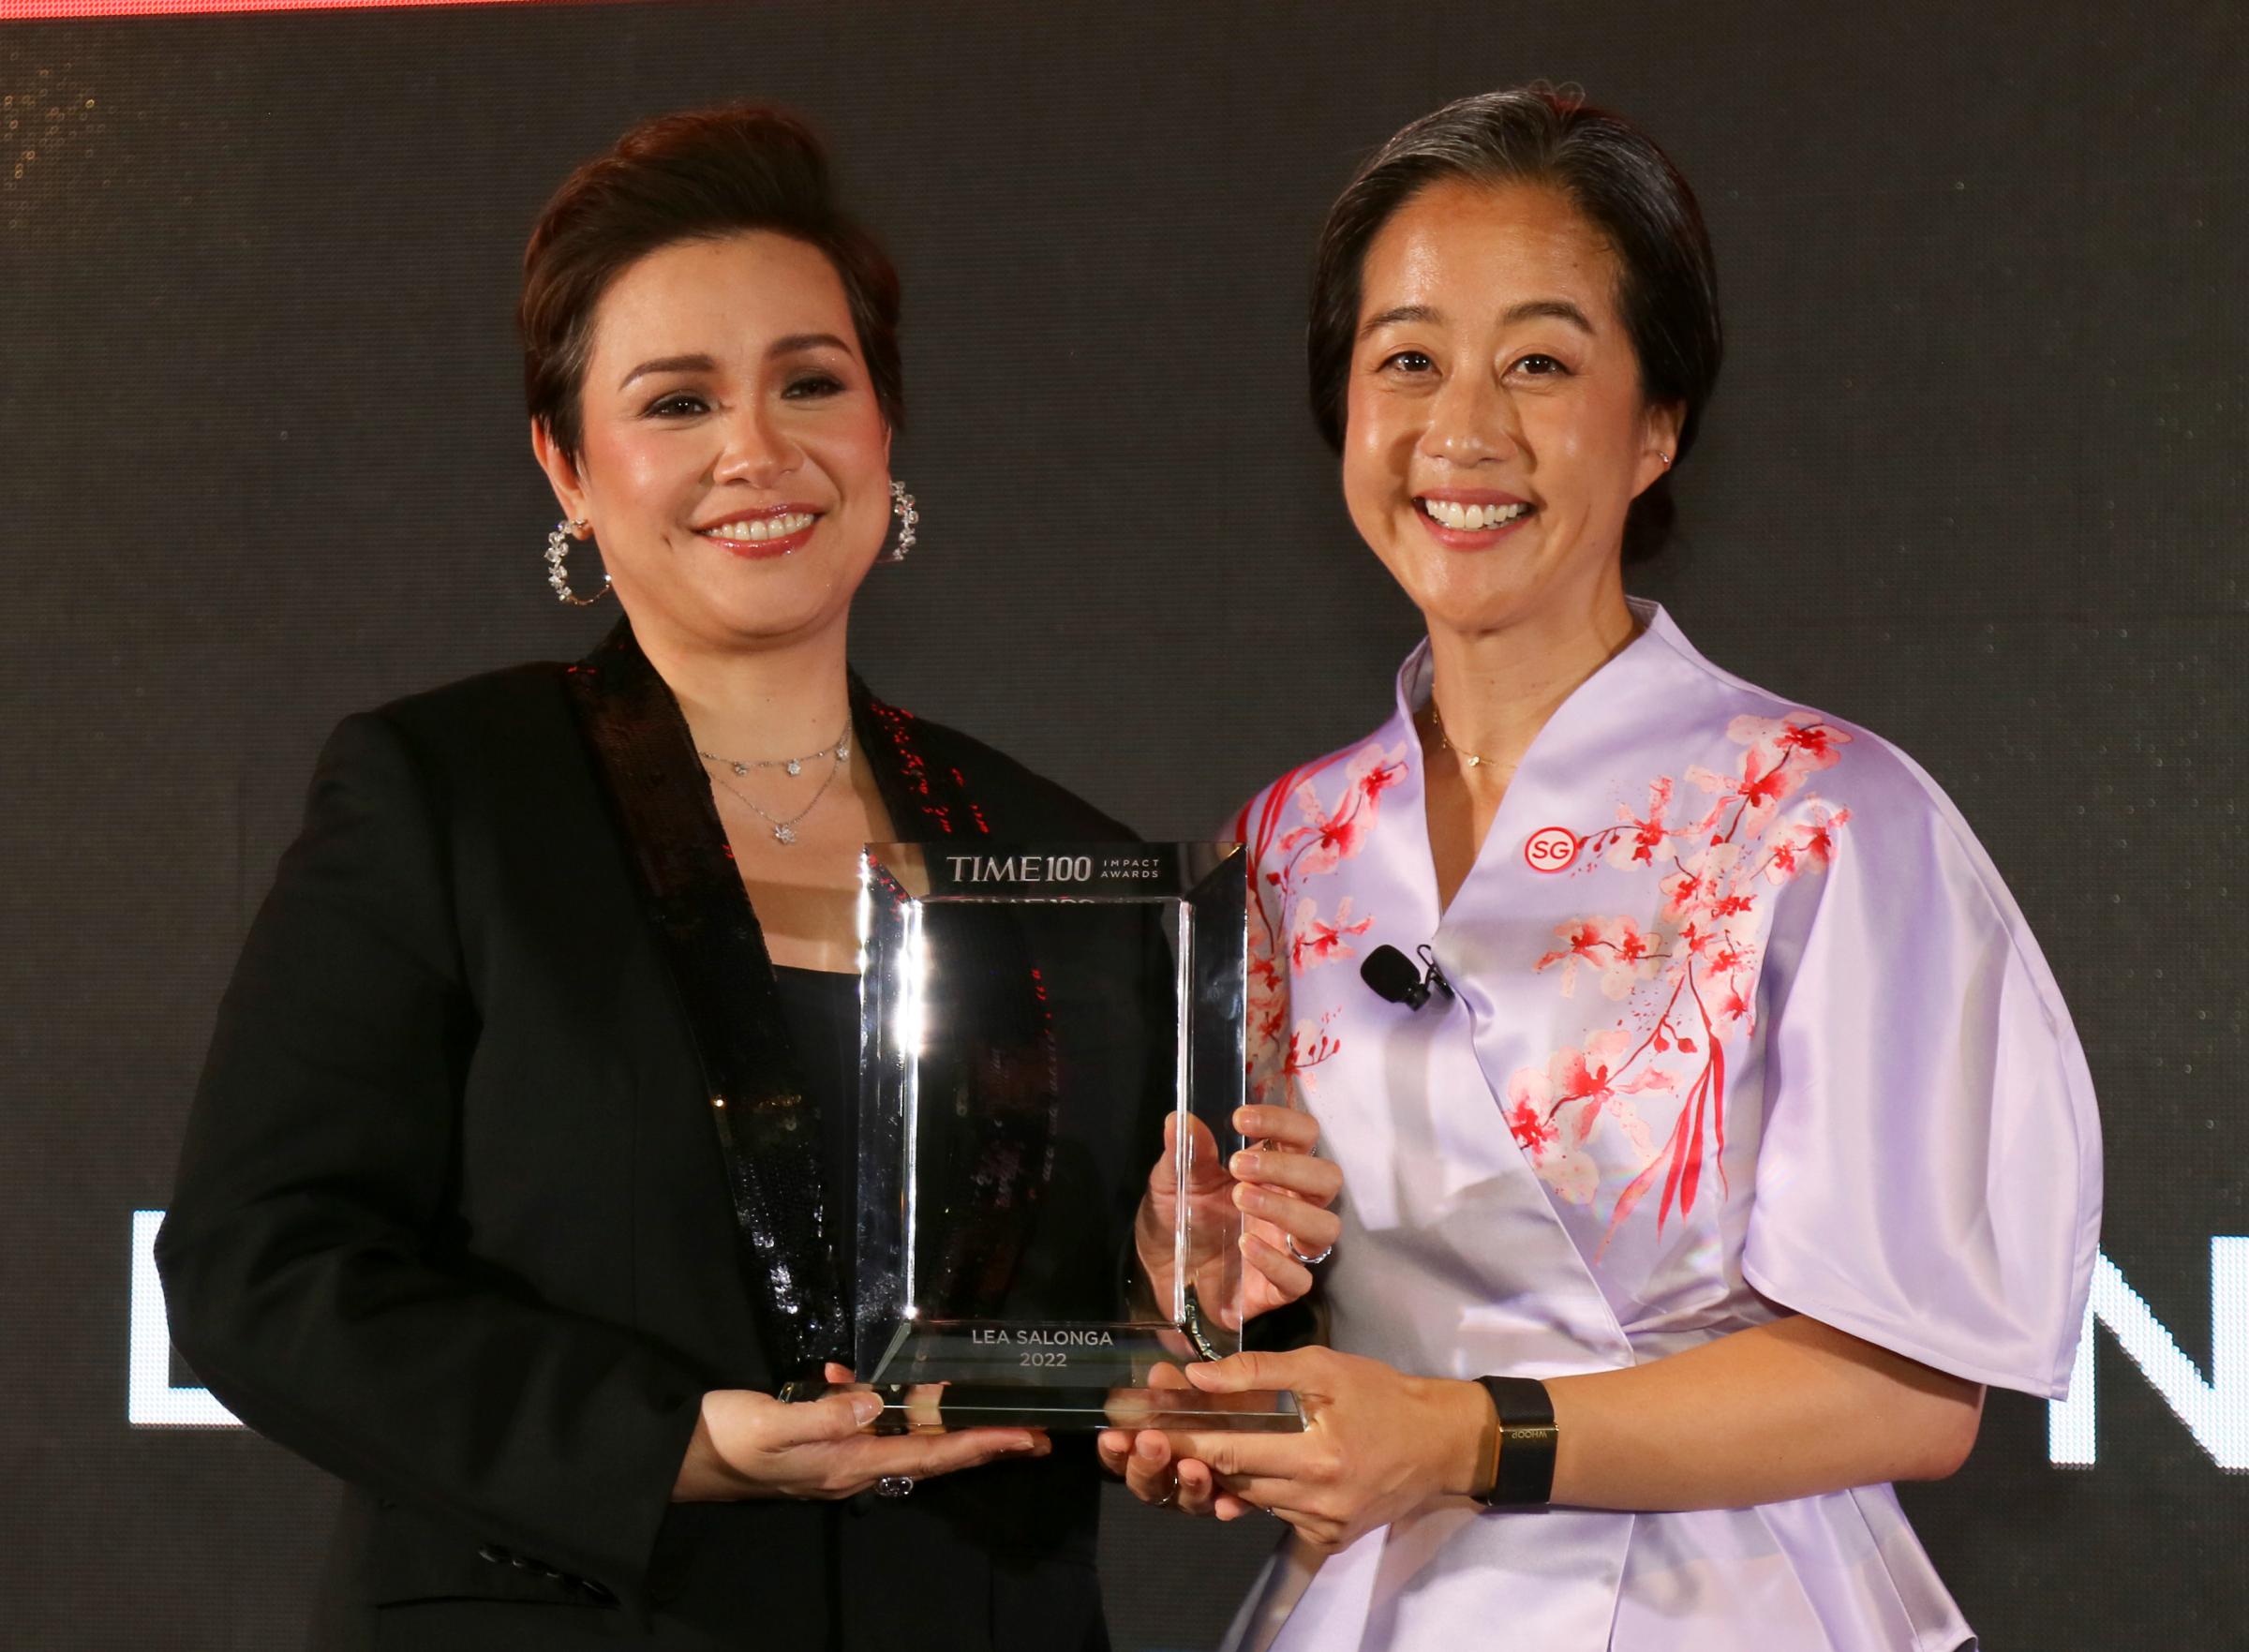 TIME100 Impact Awards: Singapore